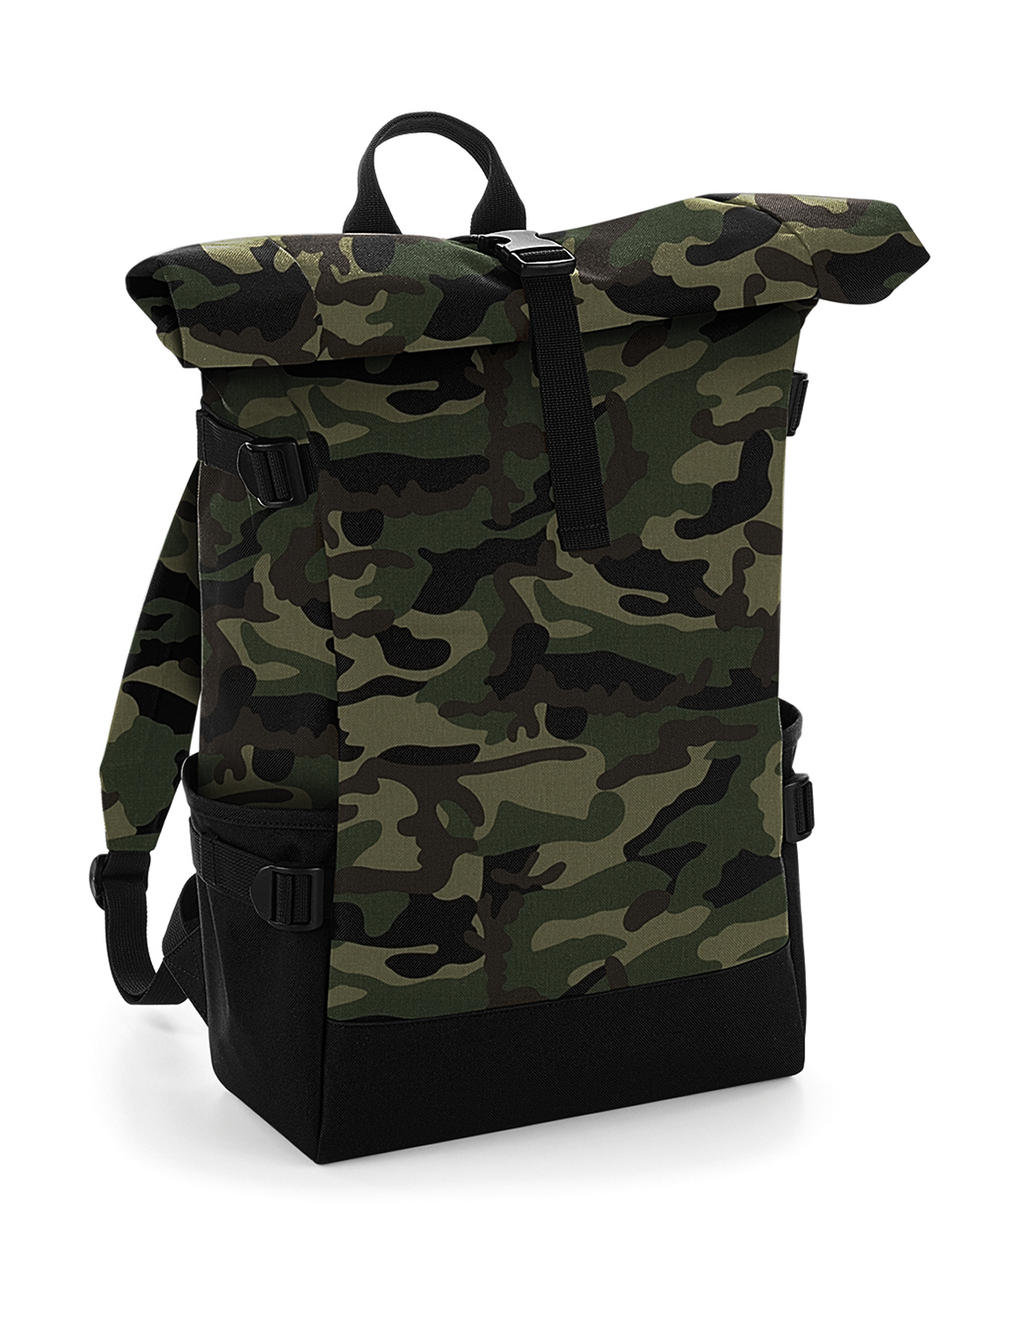  Block Roll-Top Backpack in Farbe Jungle Camo/Black